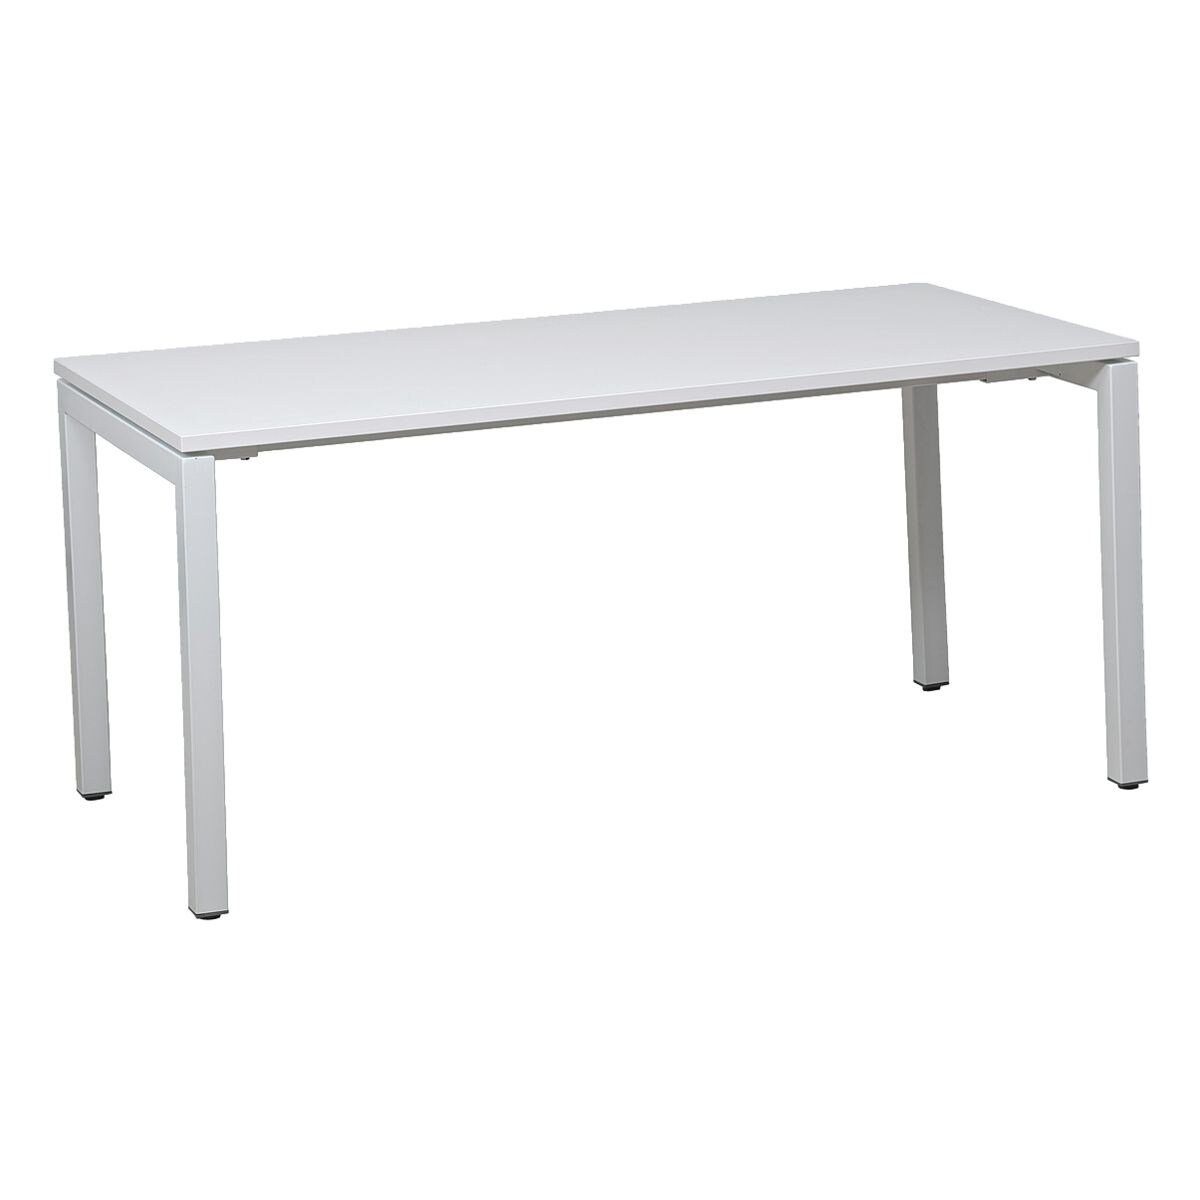 GUERKAN Schreibtisch, ABS-Kanten, 4-Fuß, belastbar bis 100 kg weiß/weiß | weiß